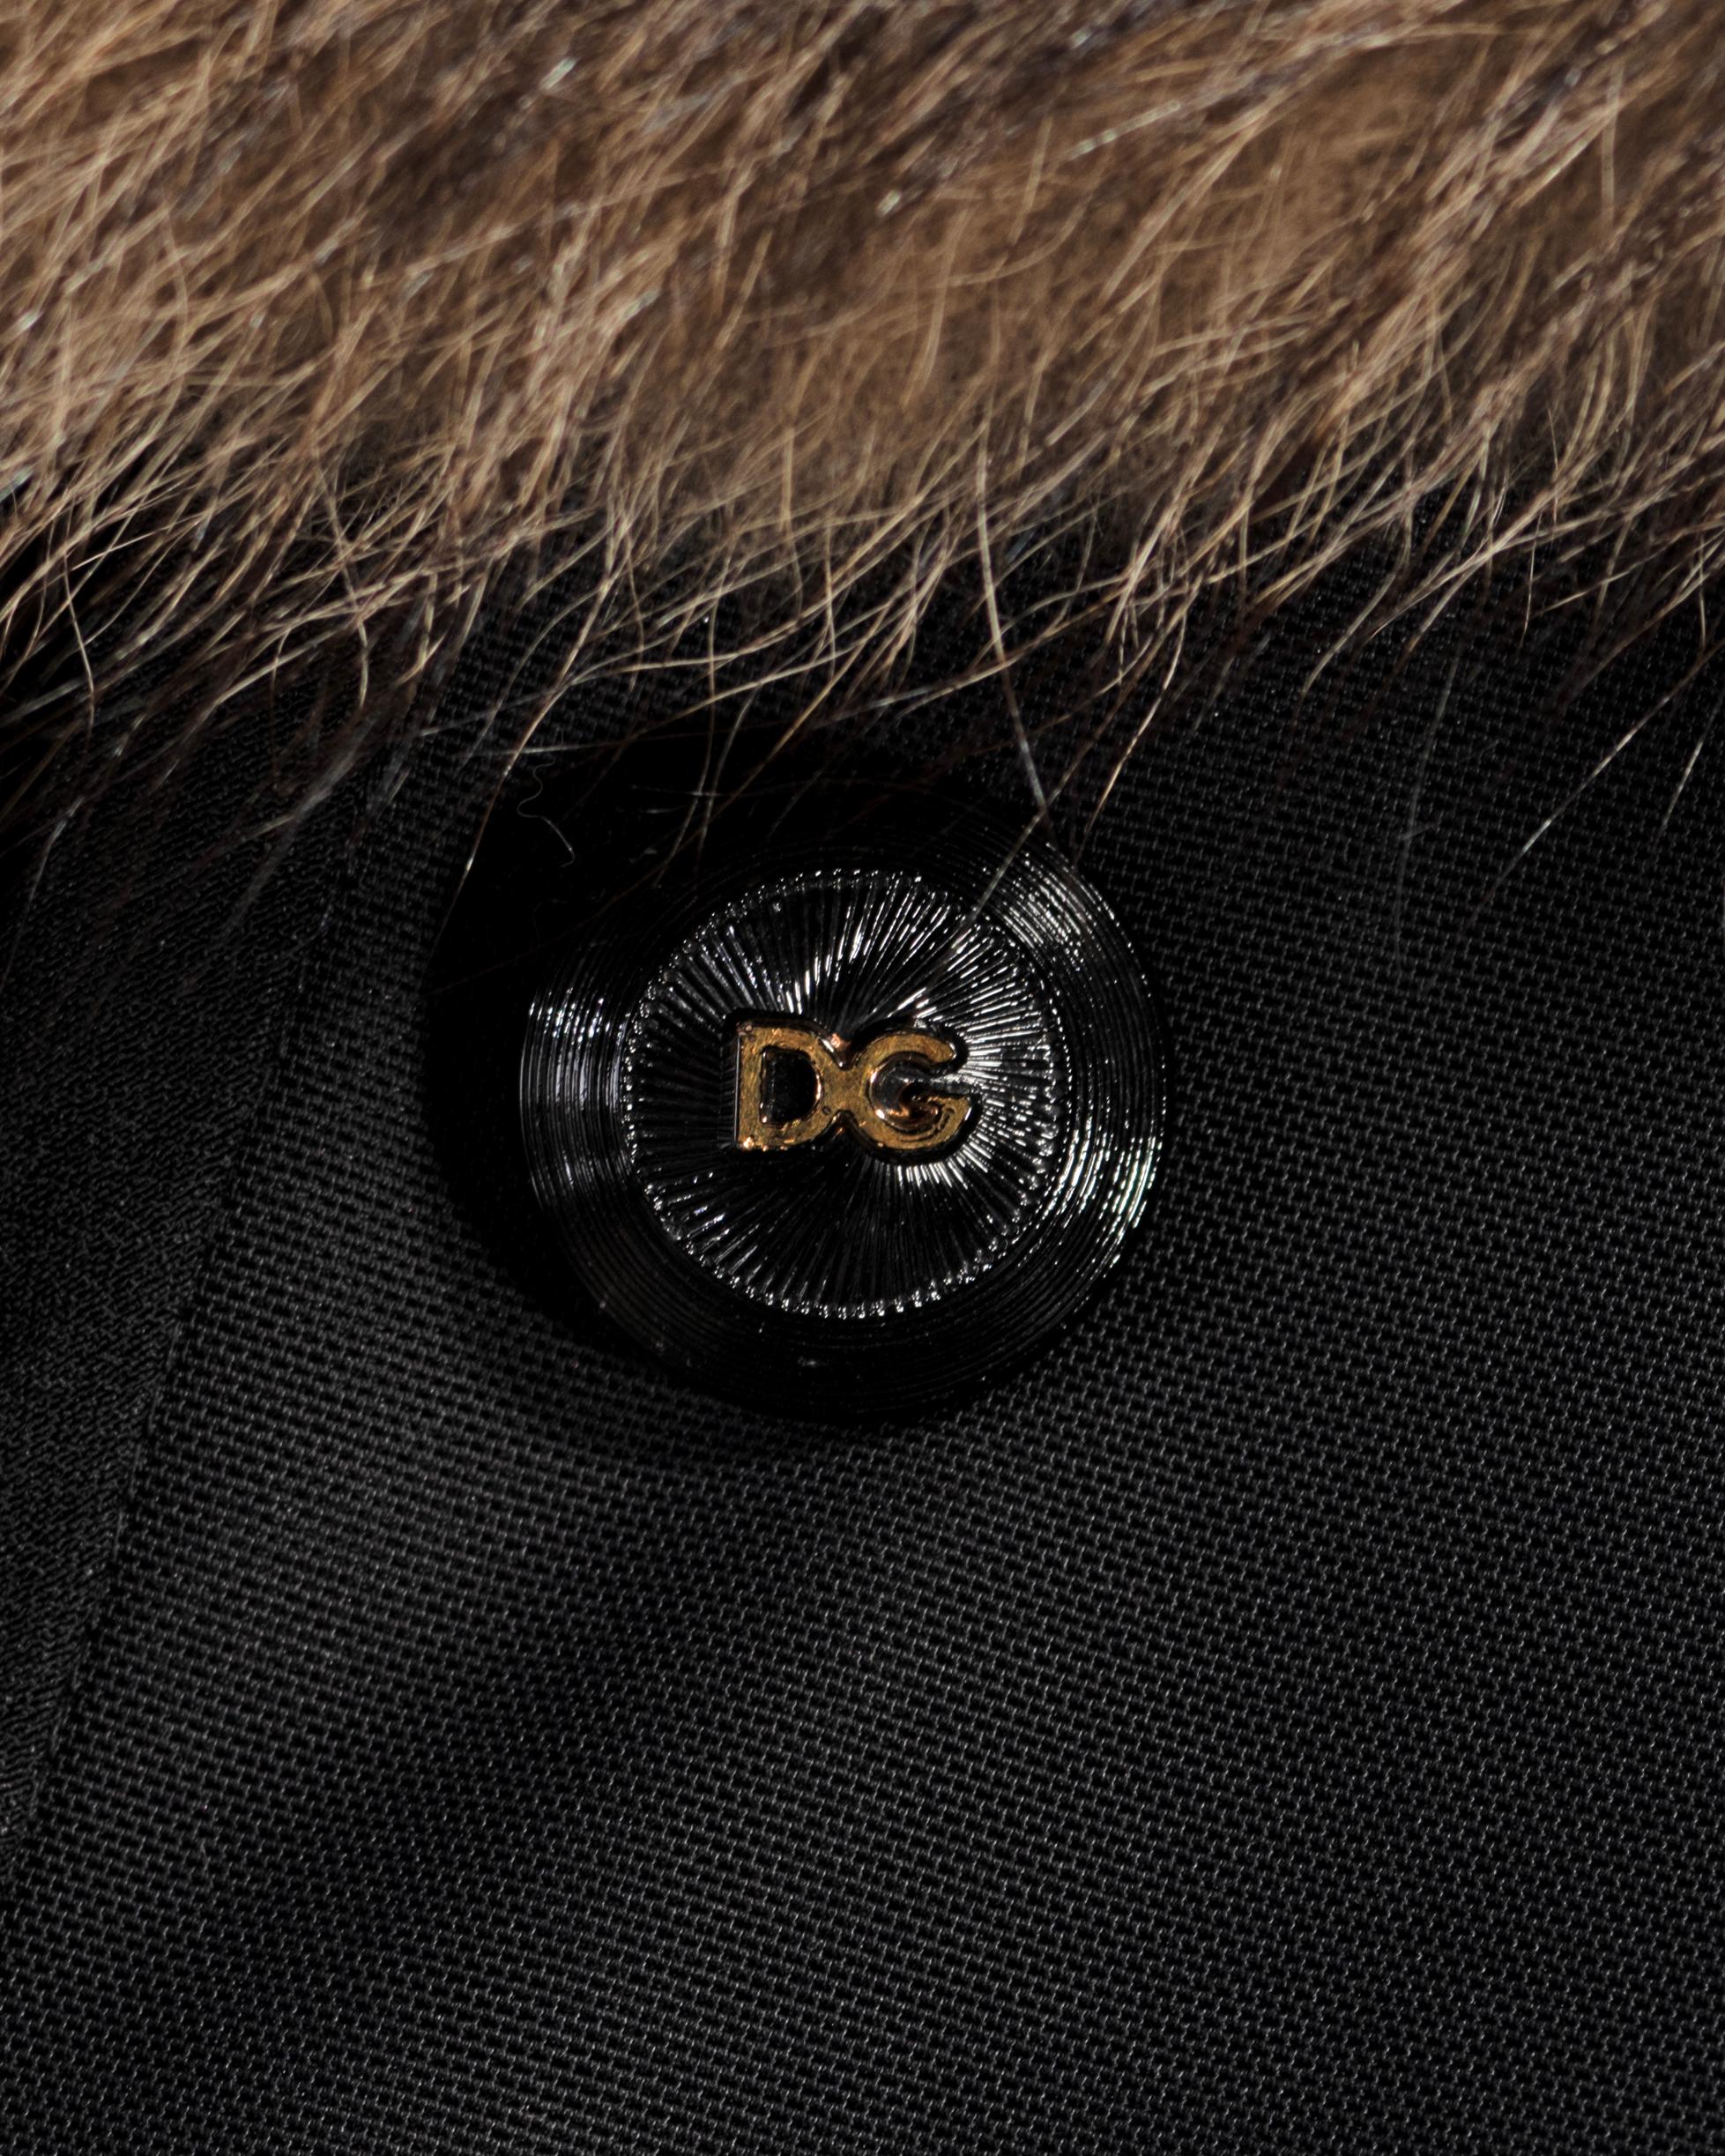 Dolce & Gabbana Black Power Net Skirt Suit with Fur Collar, fw 1995 1